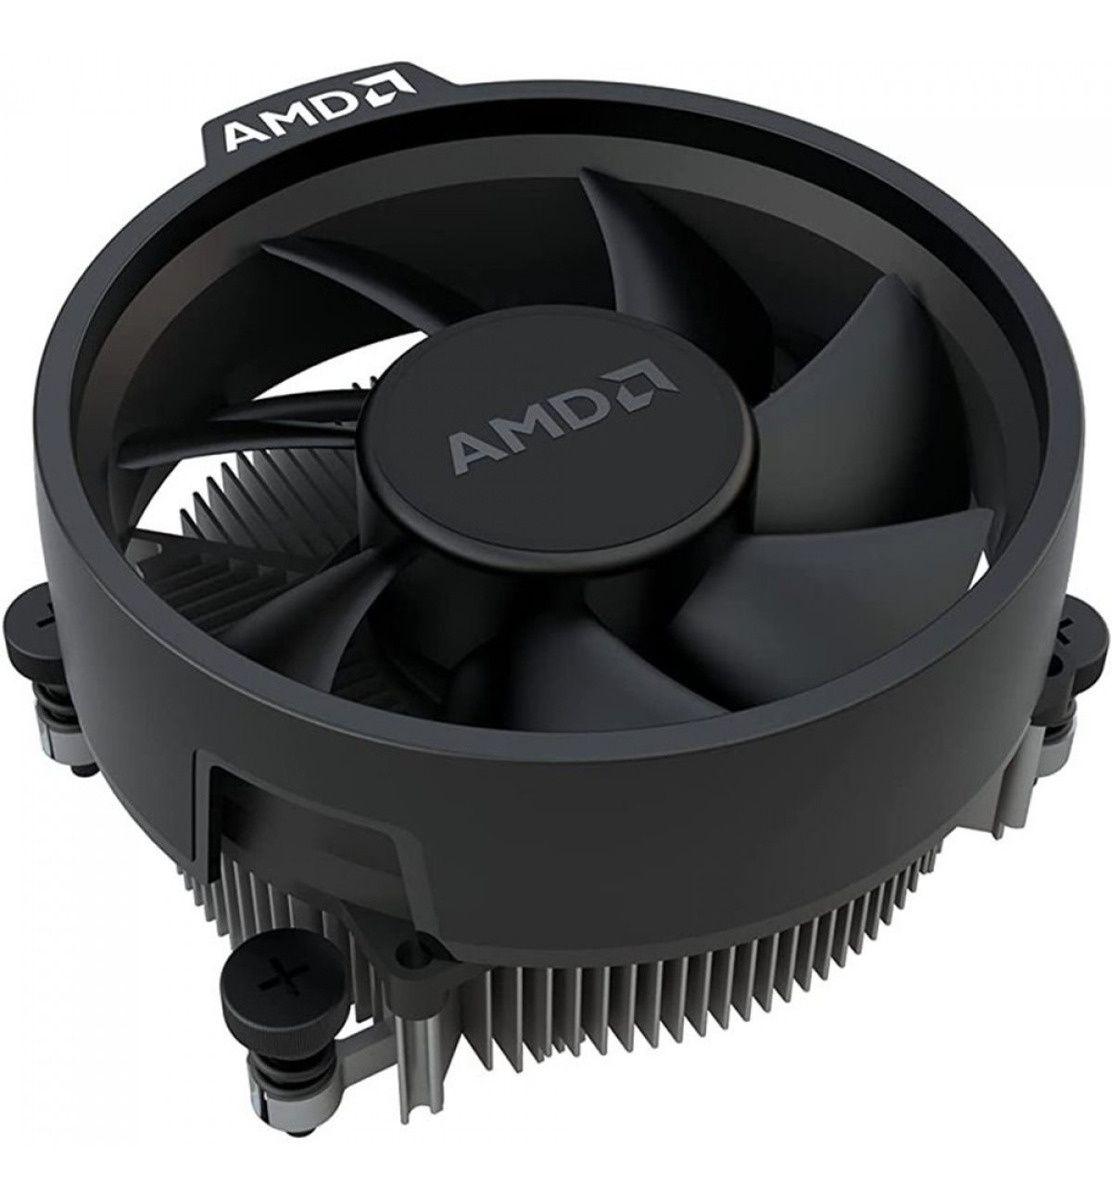 Cooler original AMD socket AM4 Novo, nunca usado